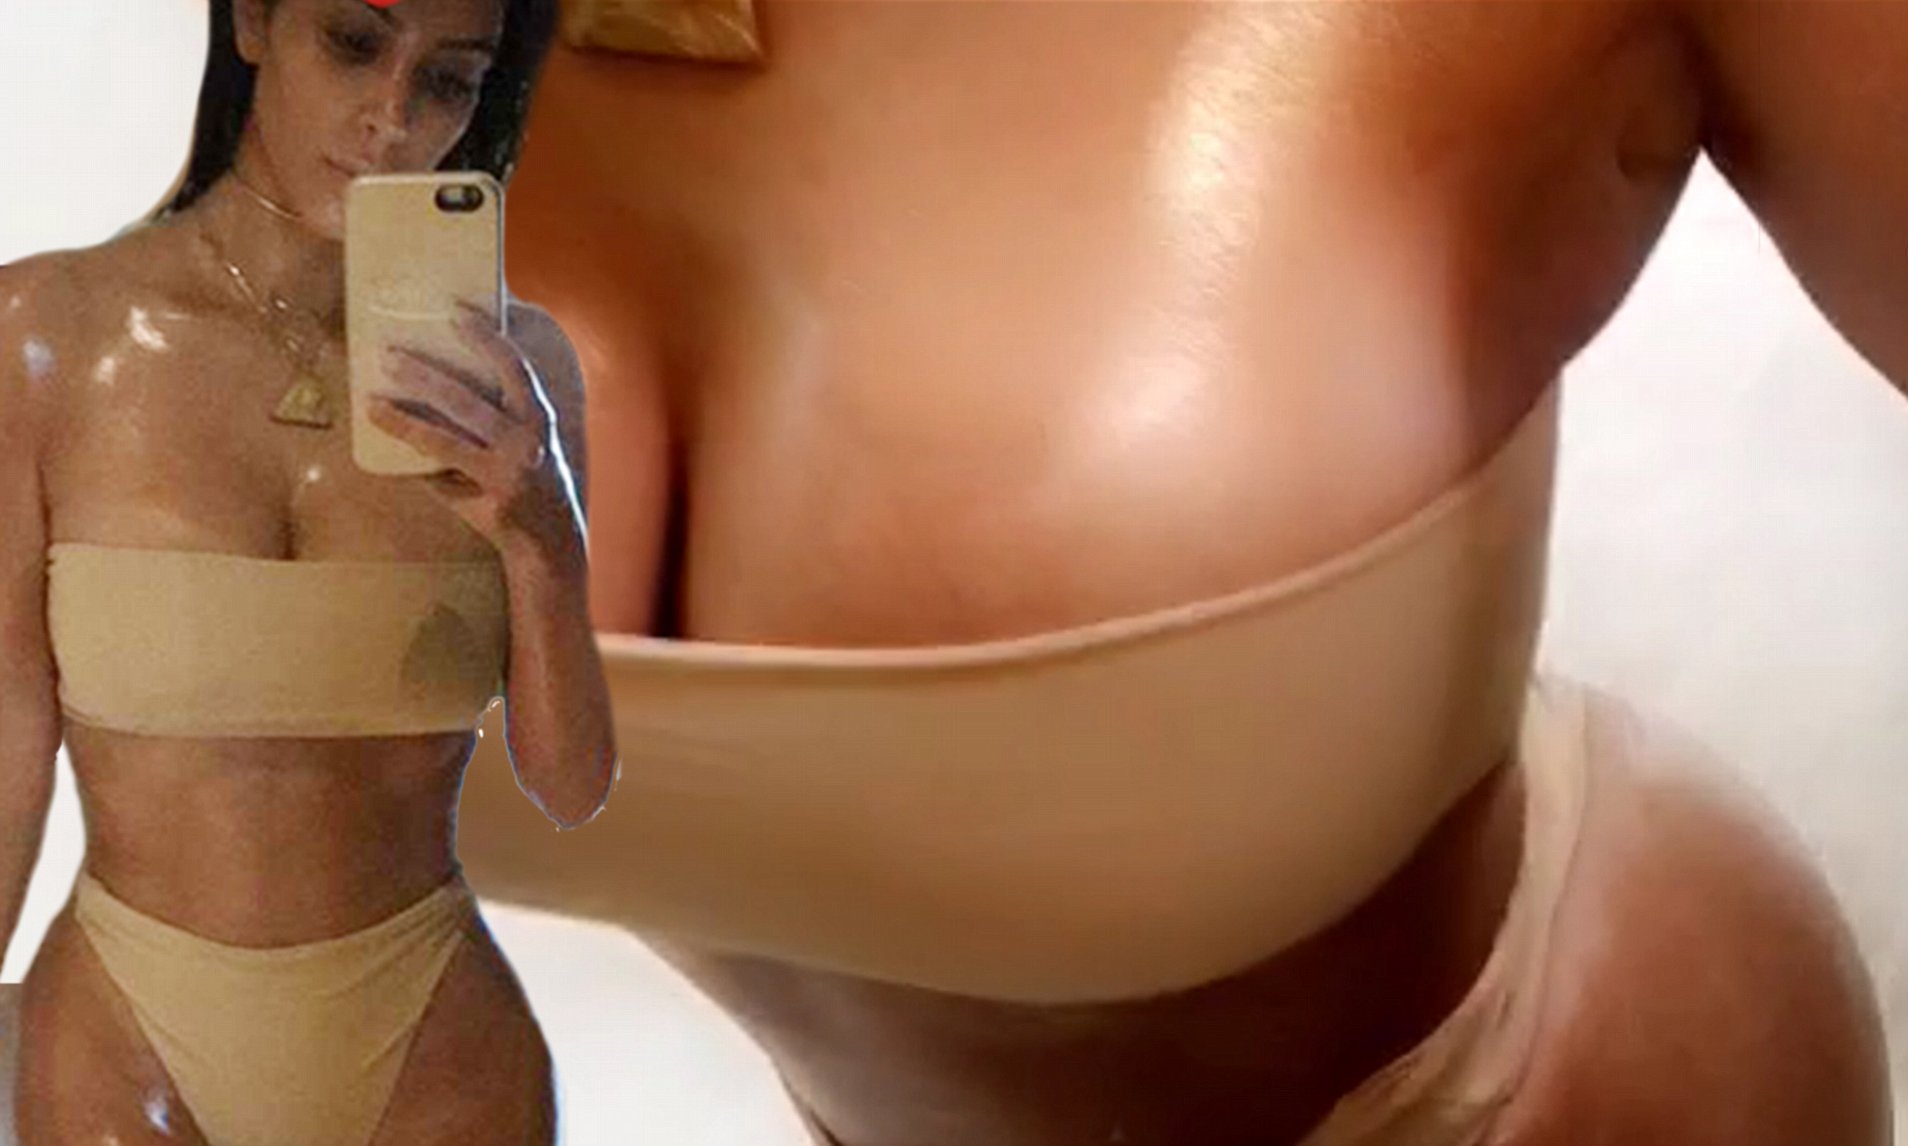 ash wilkinson share kim kardashian bouncing boobs photos